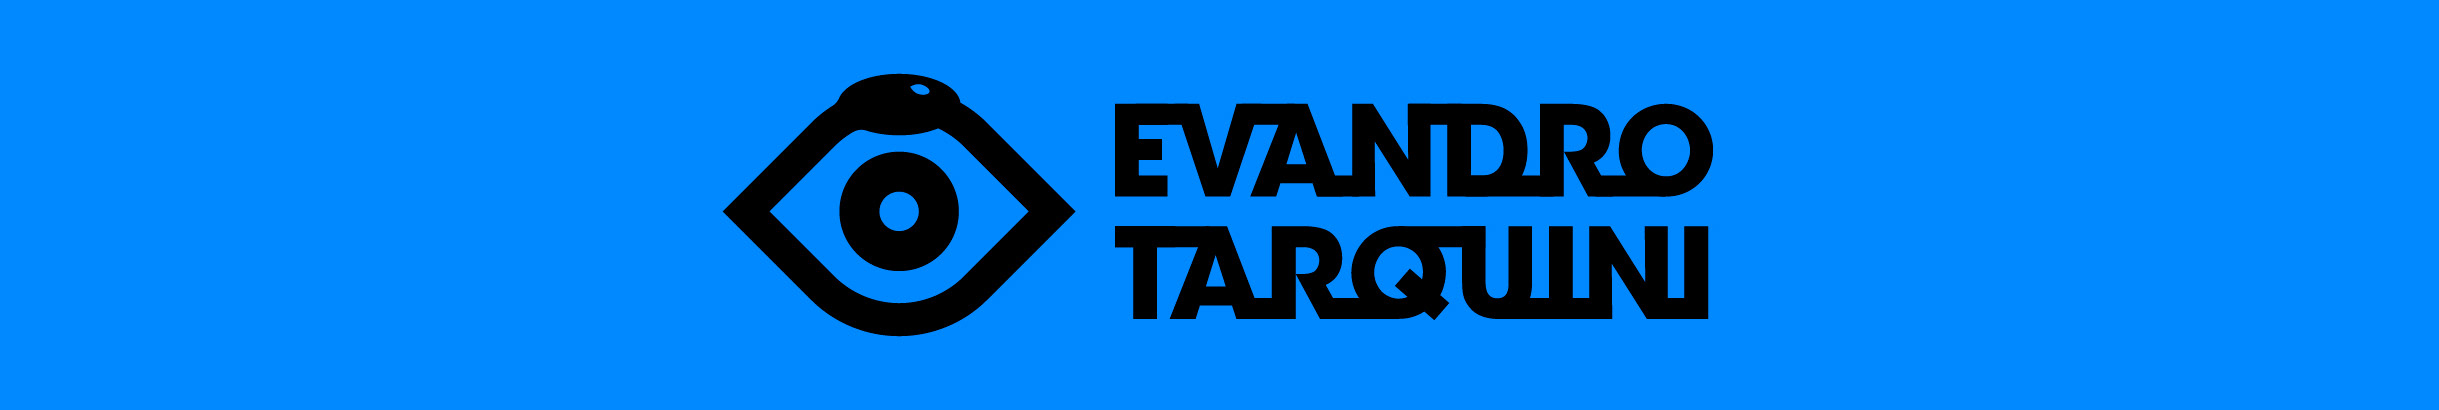 Banner de perfil de Evandro Tarquini